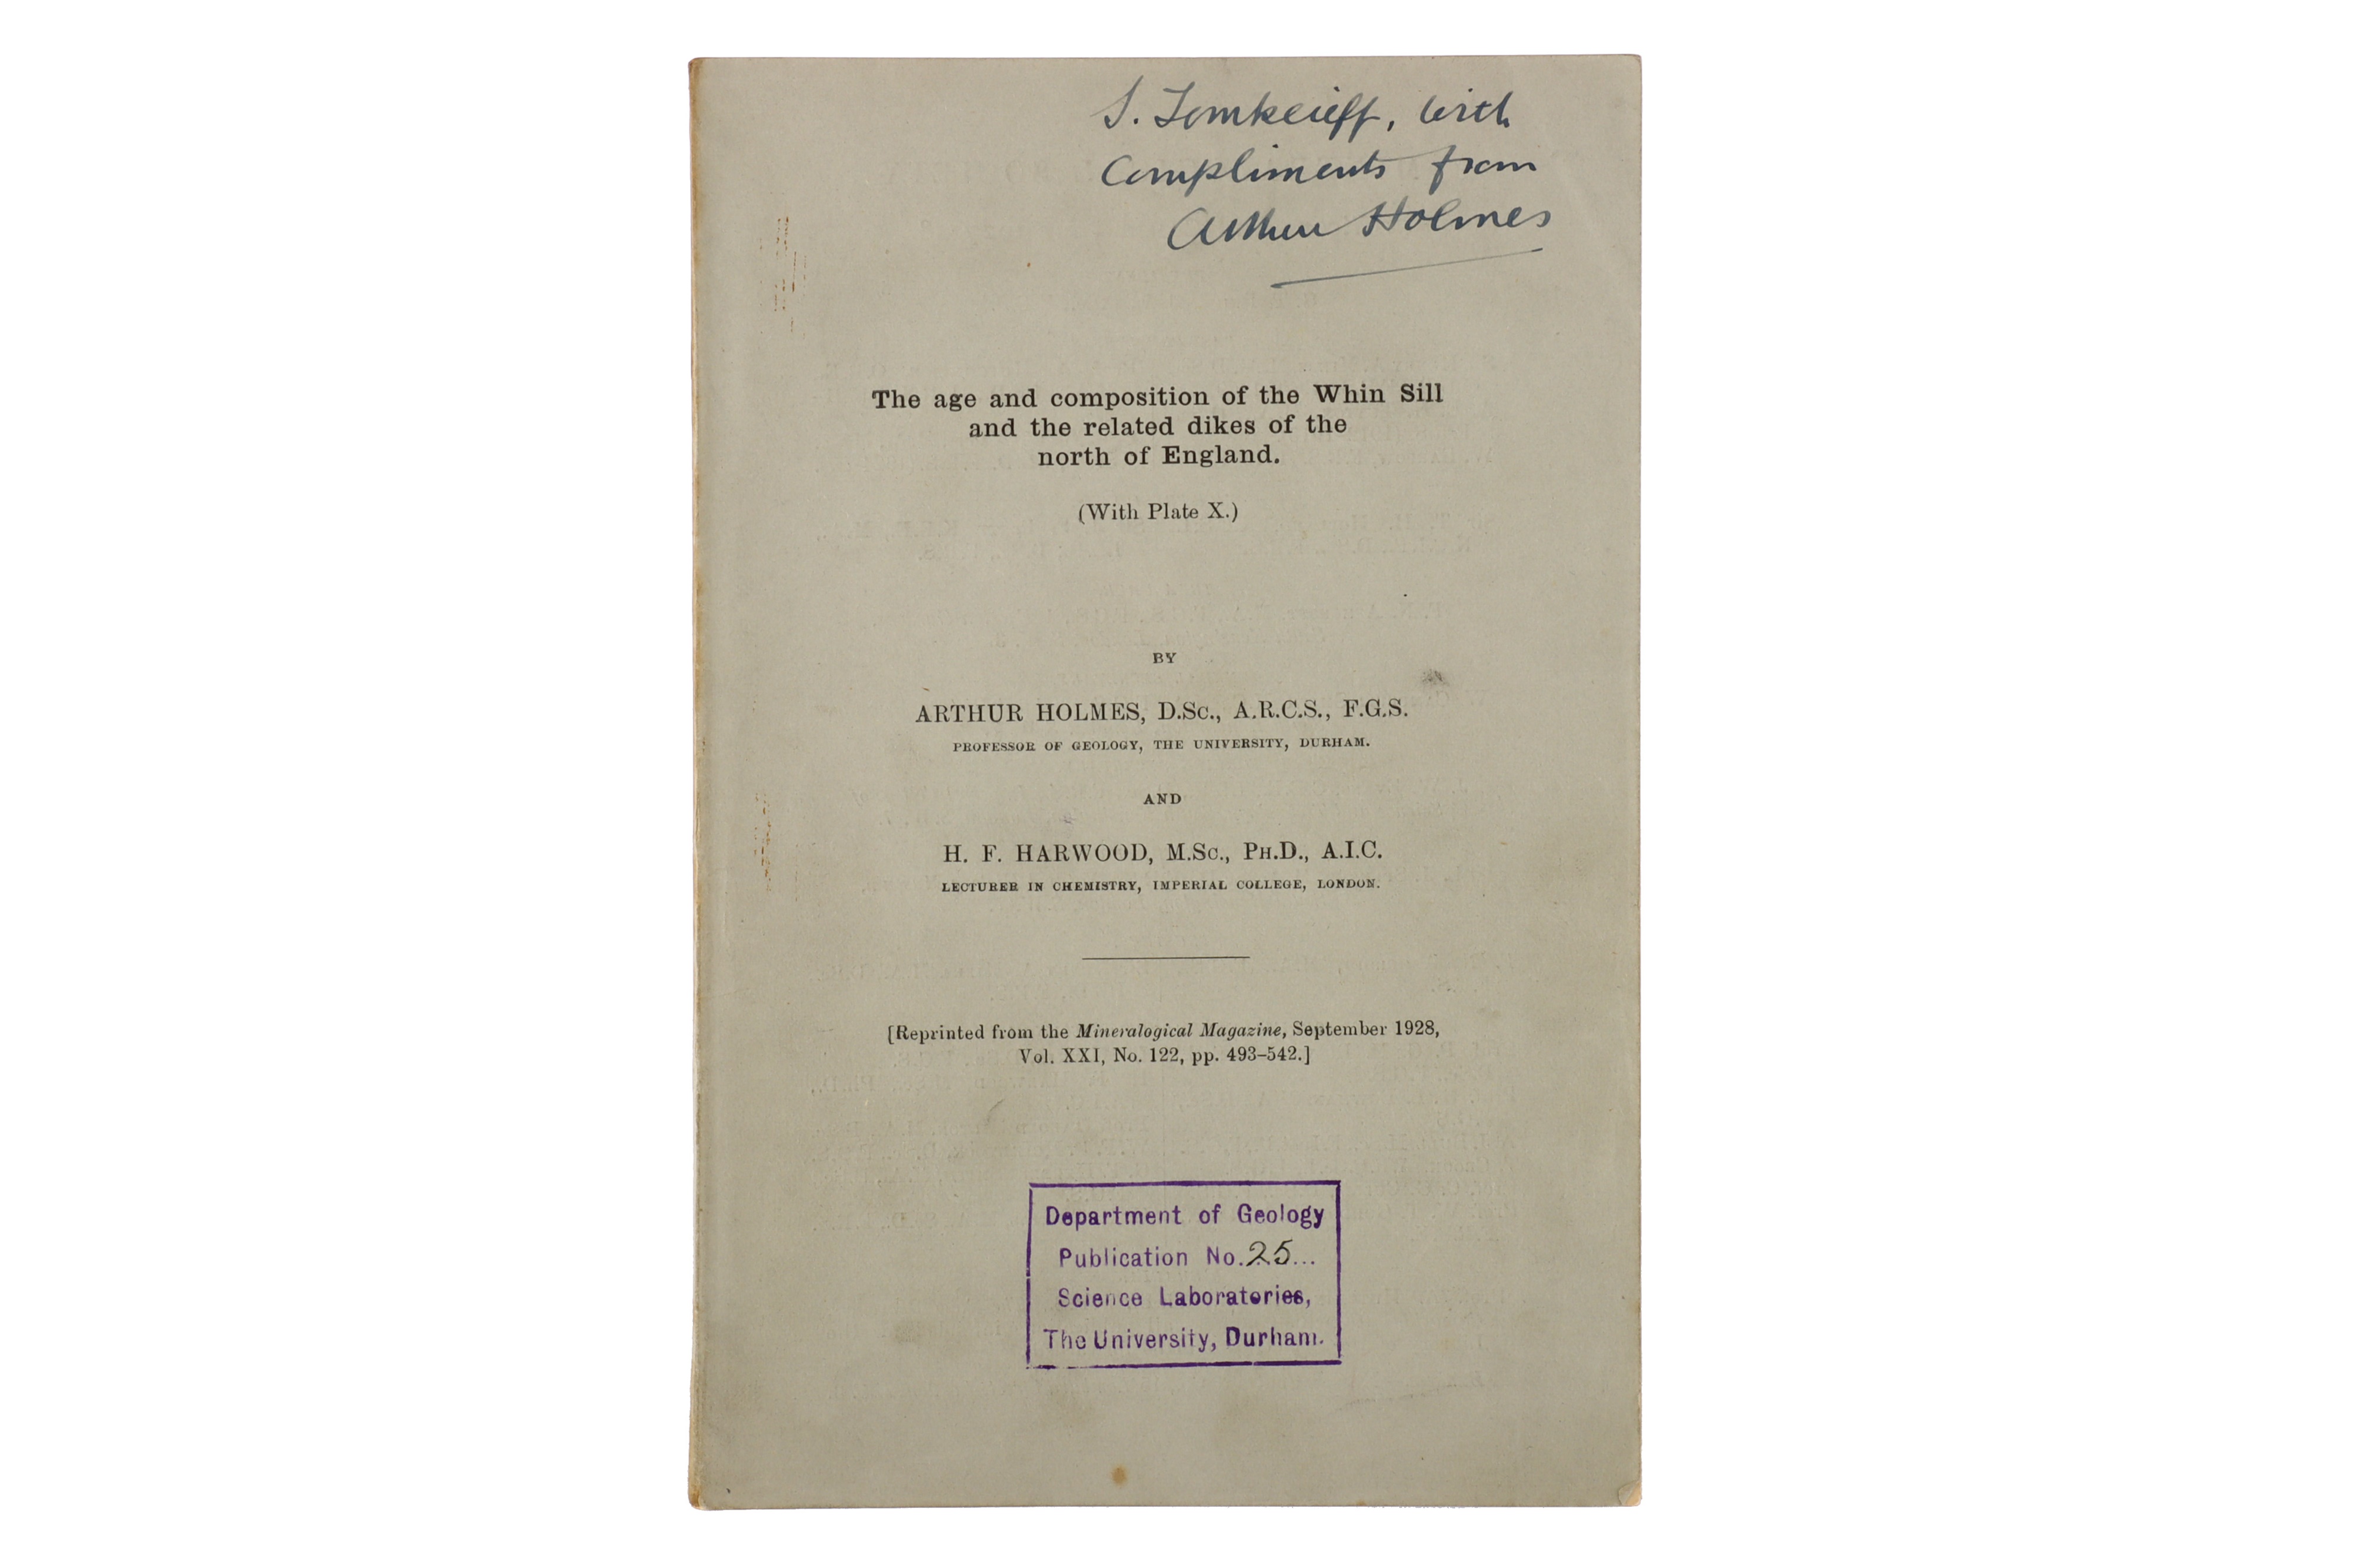 Holmes, Arthur, A Signed Copy of An Offprint,